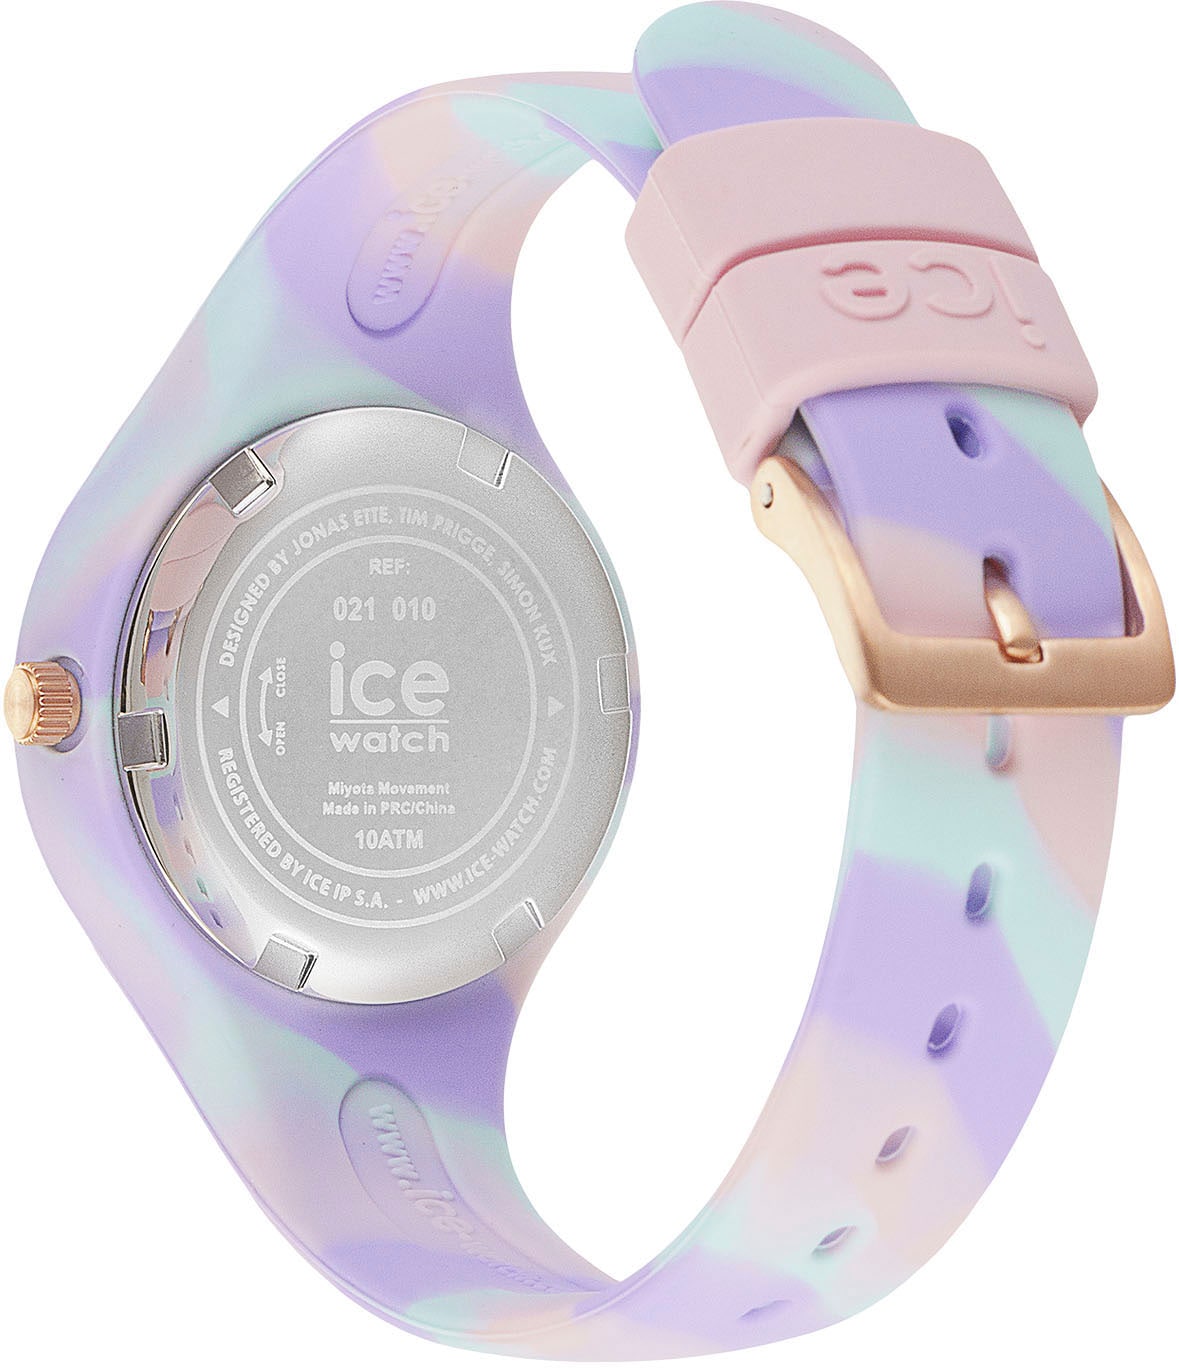 als 021010«, Geschenk ice-watch auch lilac Quarzuhr ideal OTTO - Extra-Small bei Sweet tie - »ICE dye online and 3H, -